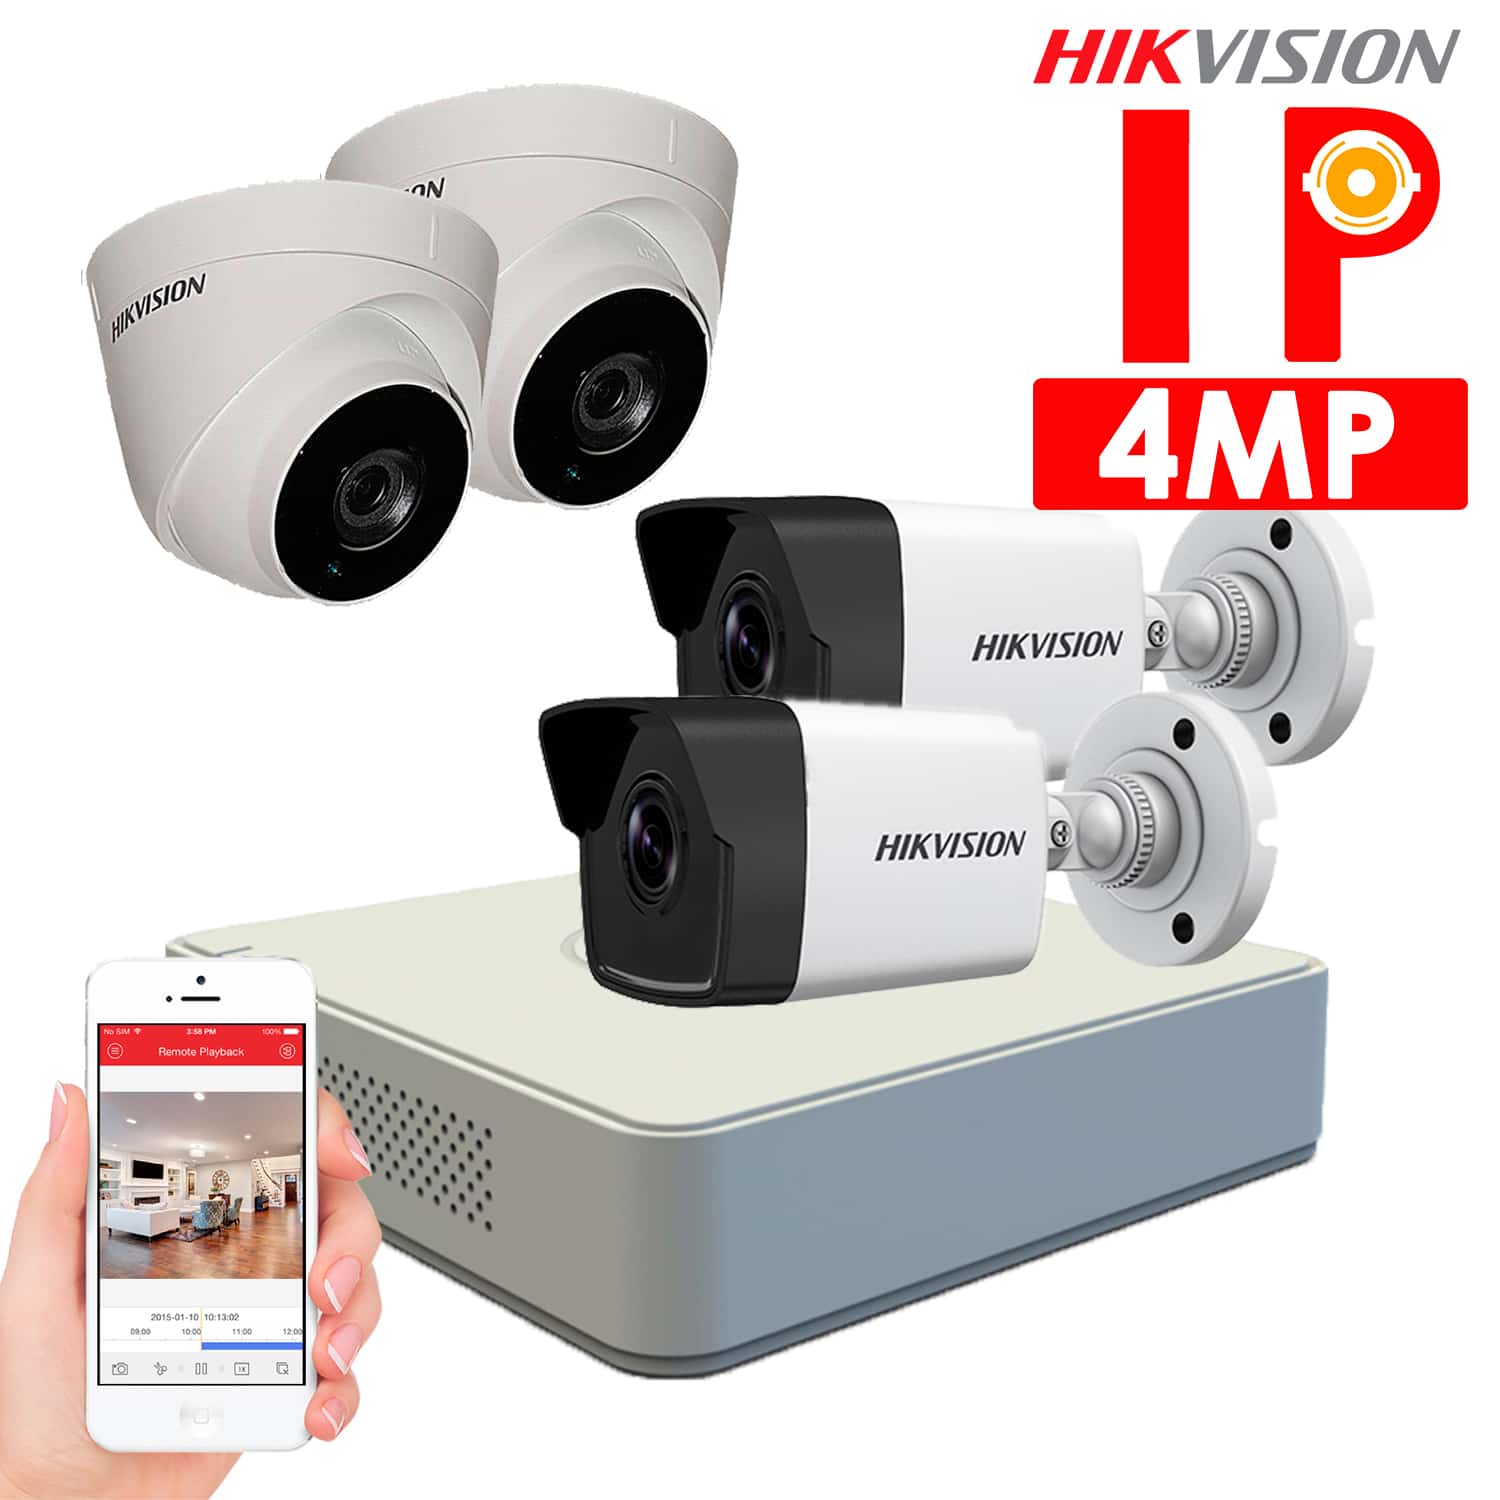 Peladura Email acento KIT Cámaras de seguridad IP Hikvision – KIT 4 cámaras IP 4Mp – Tubo y Domo  – HKIPD-042 – Sistemas de Seguridad en Lima Perú – ALFASEGUR